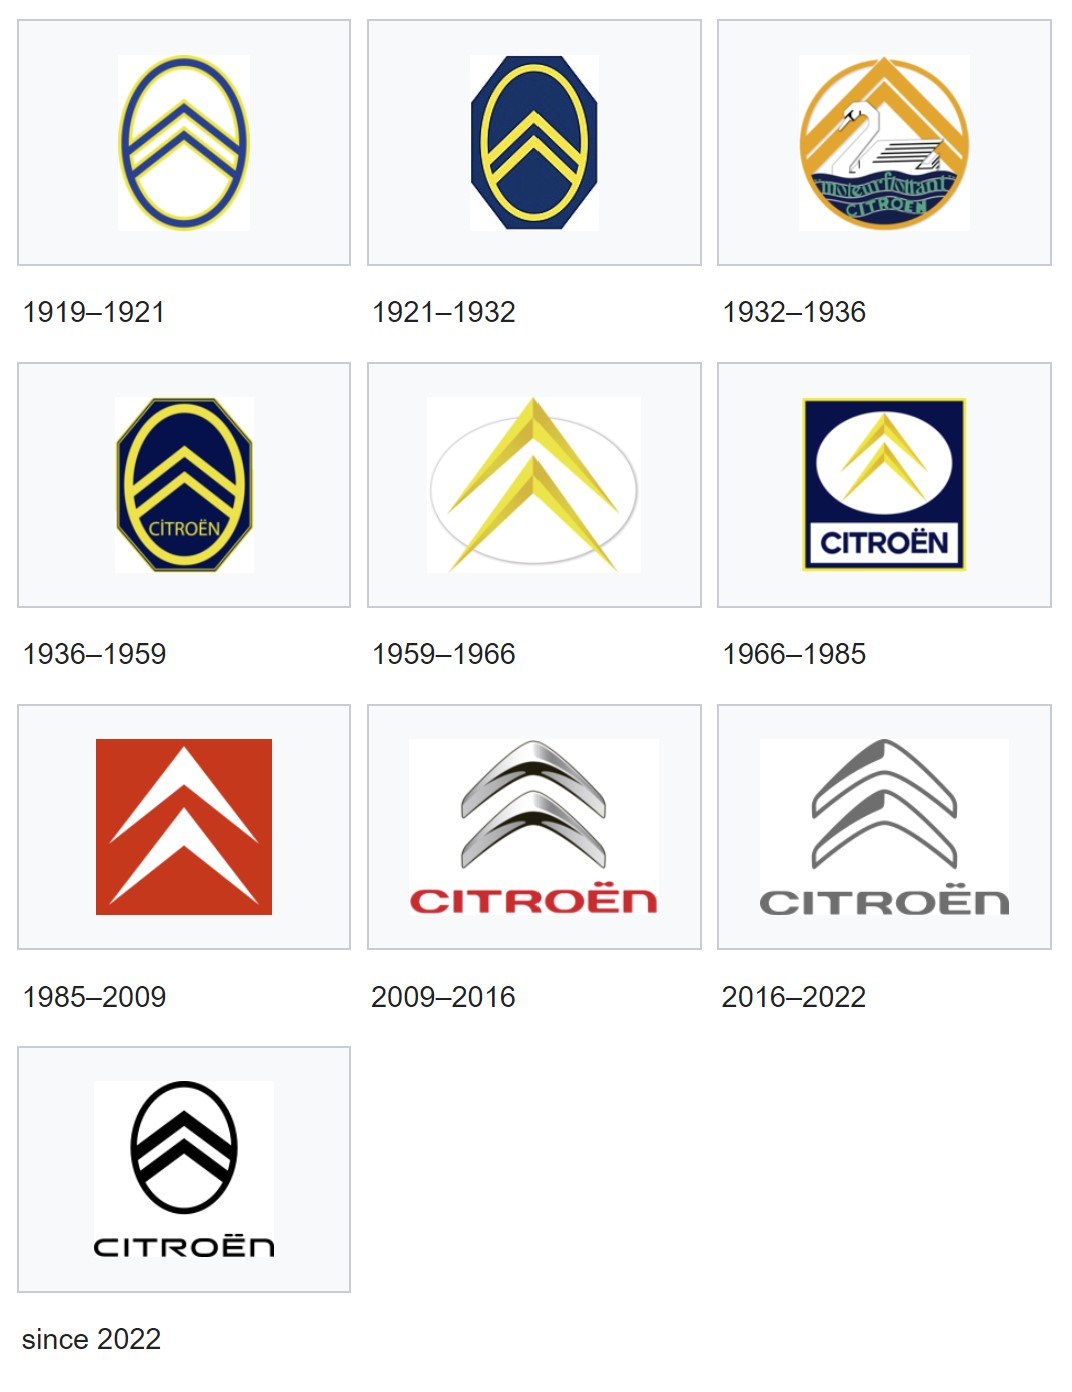 Citroen logo history